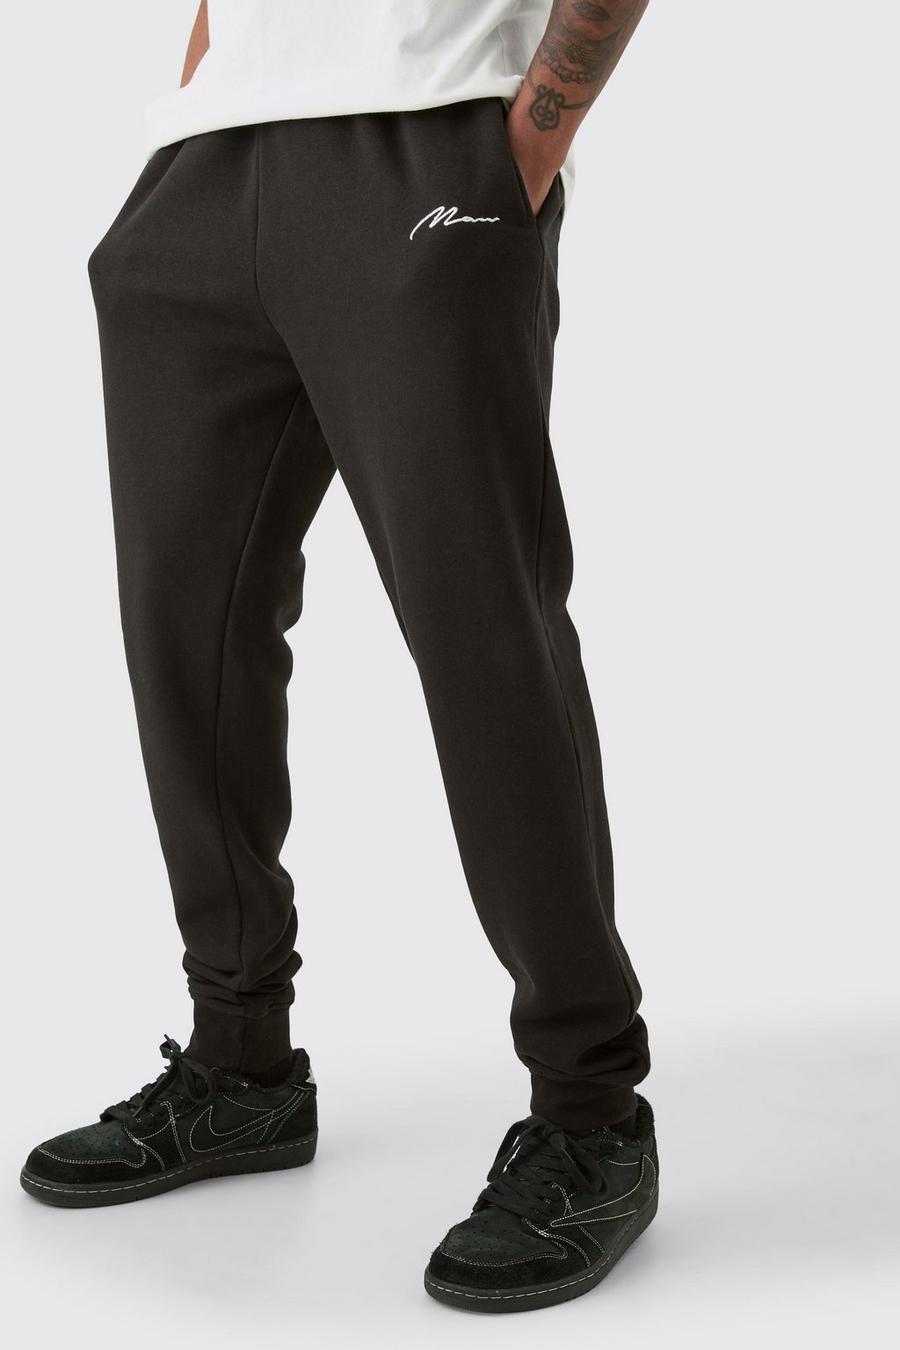 Pantalón deportivo Tall ajustado negro con firma MAN, Black image number 1